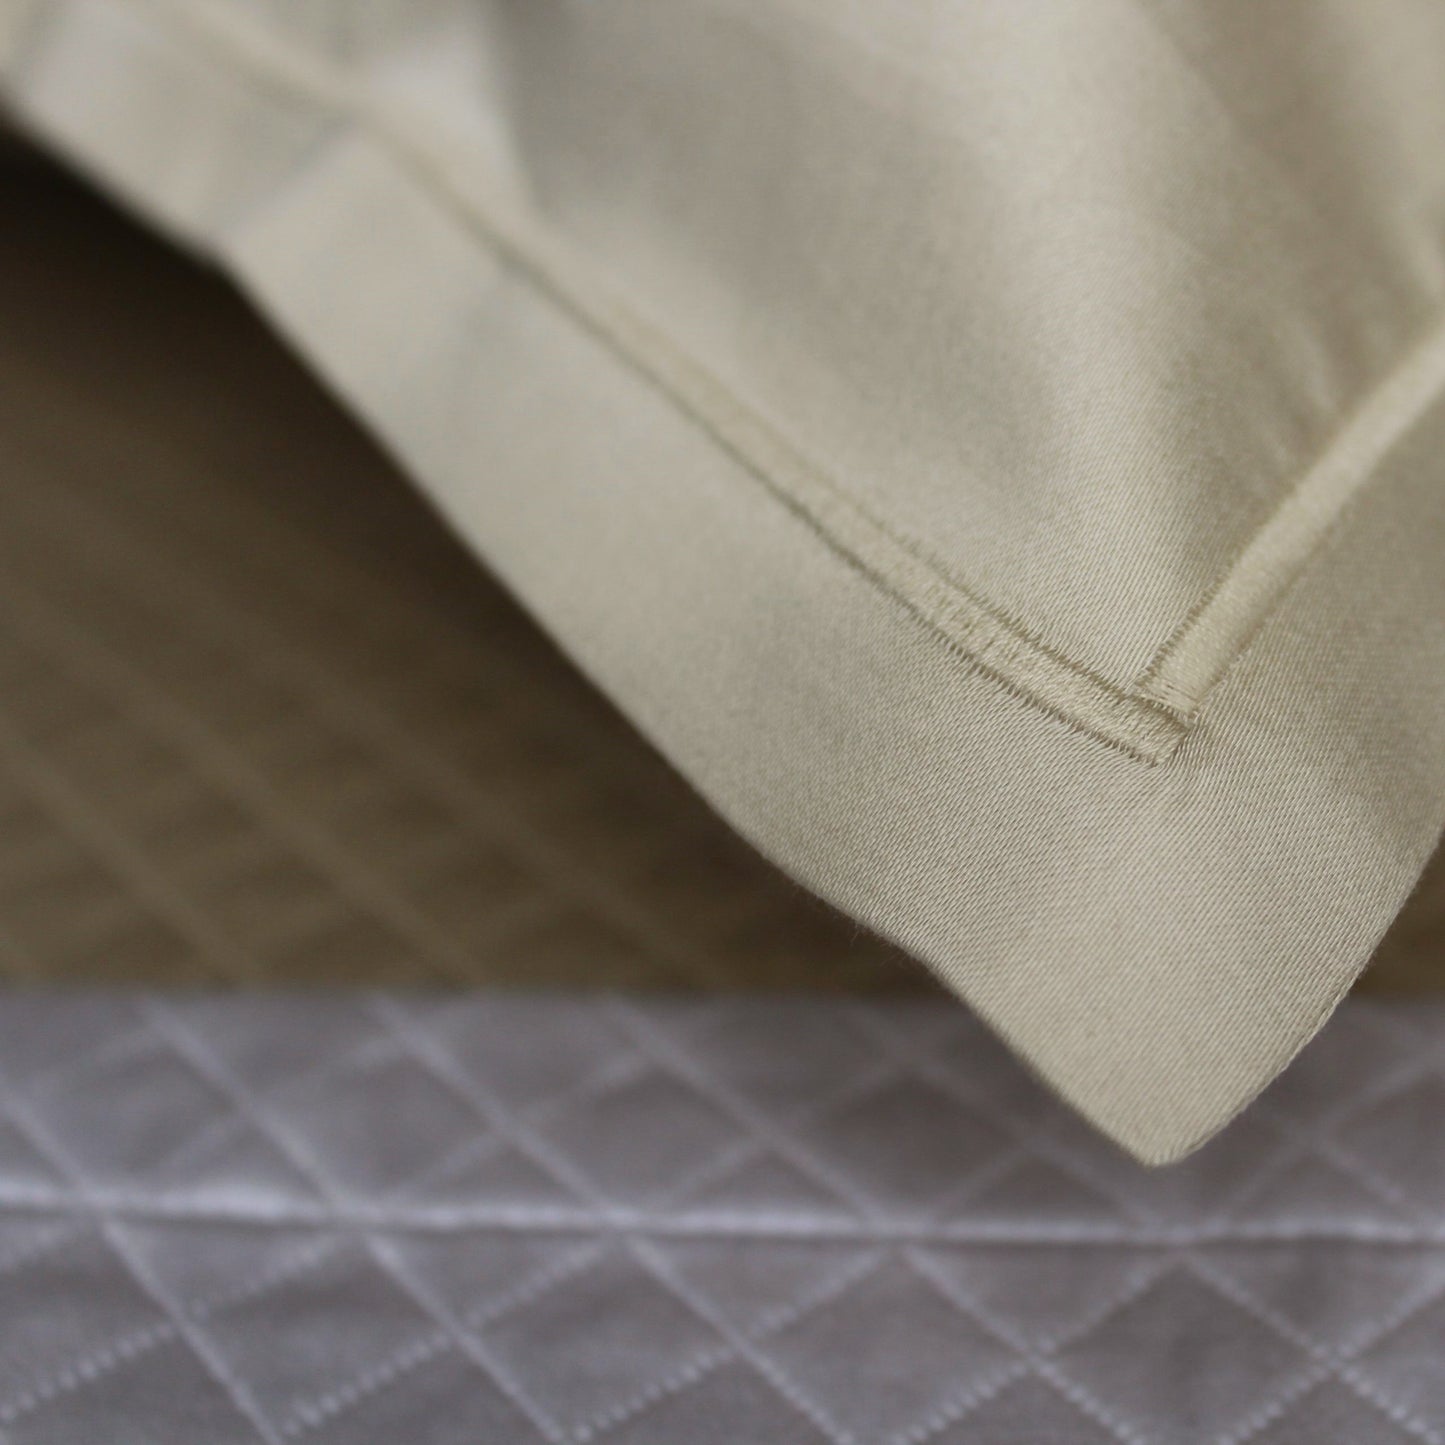 Bristol Sable Pillowcase Detail